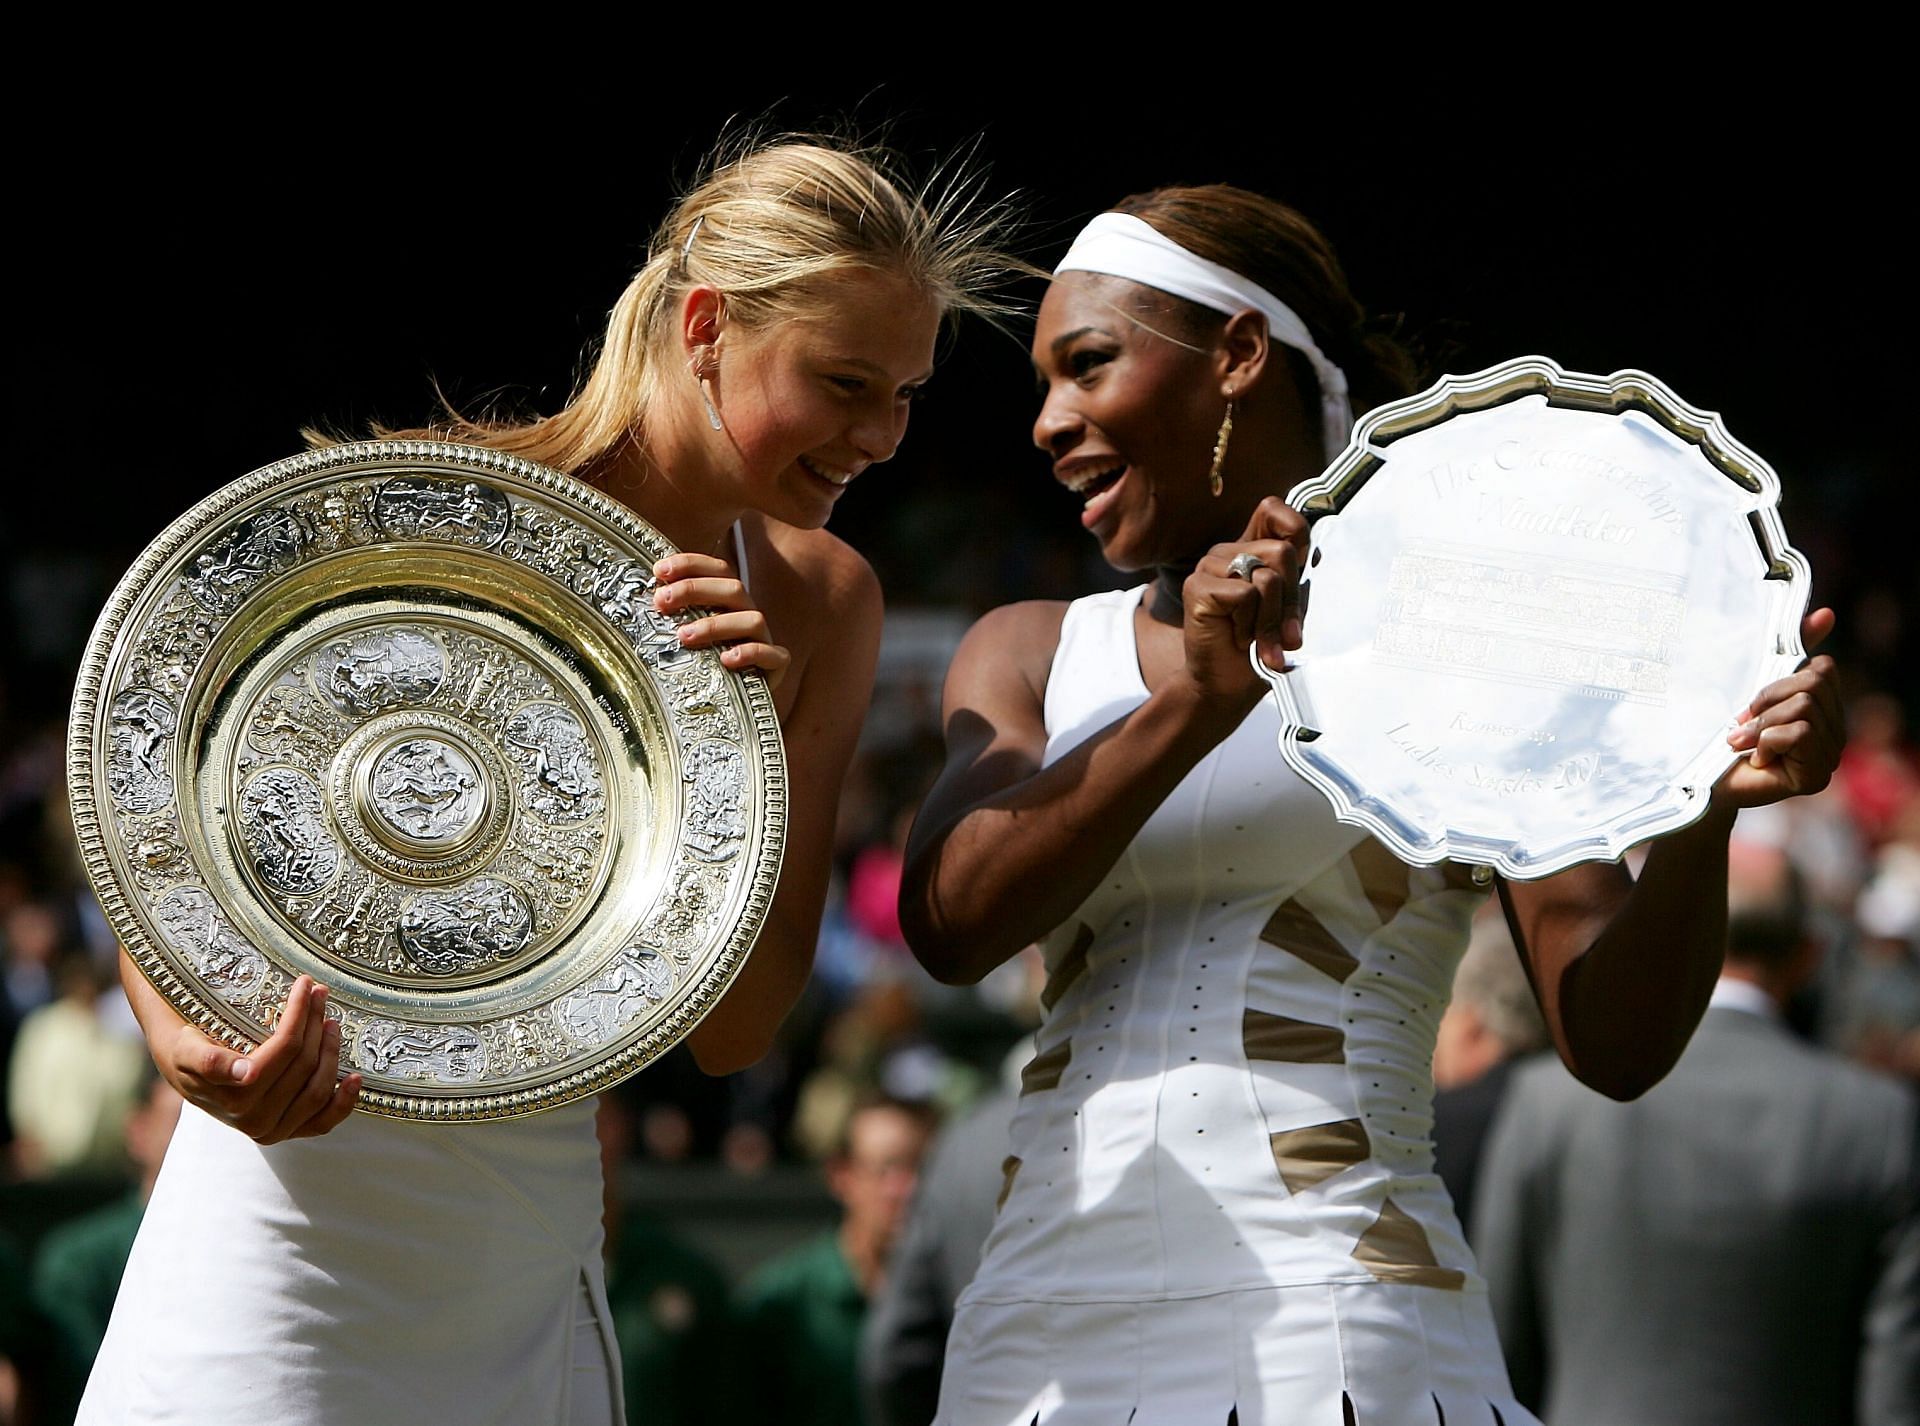 Maria Sharapova and Serena Williams at Wimbledon 2004